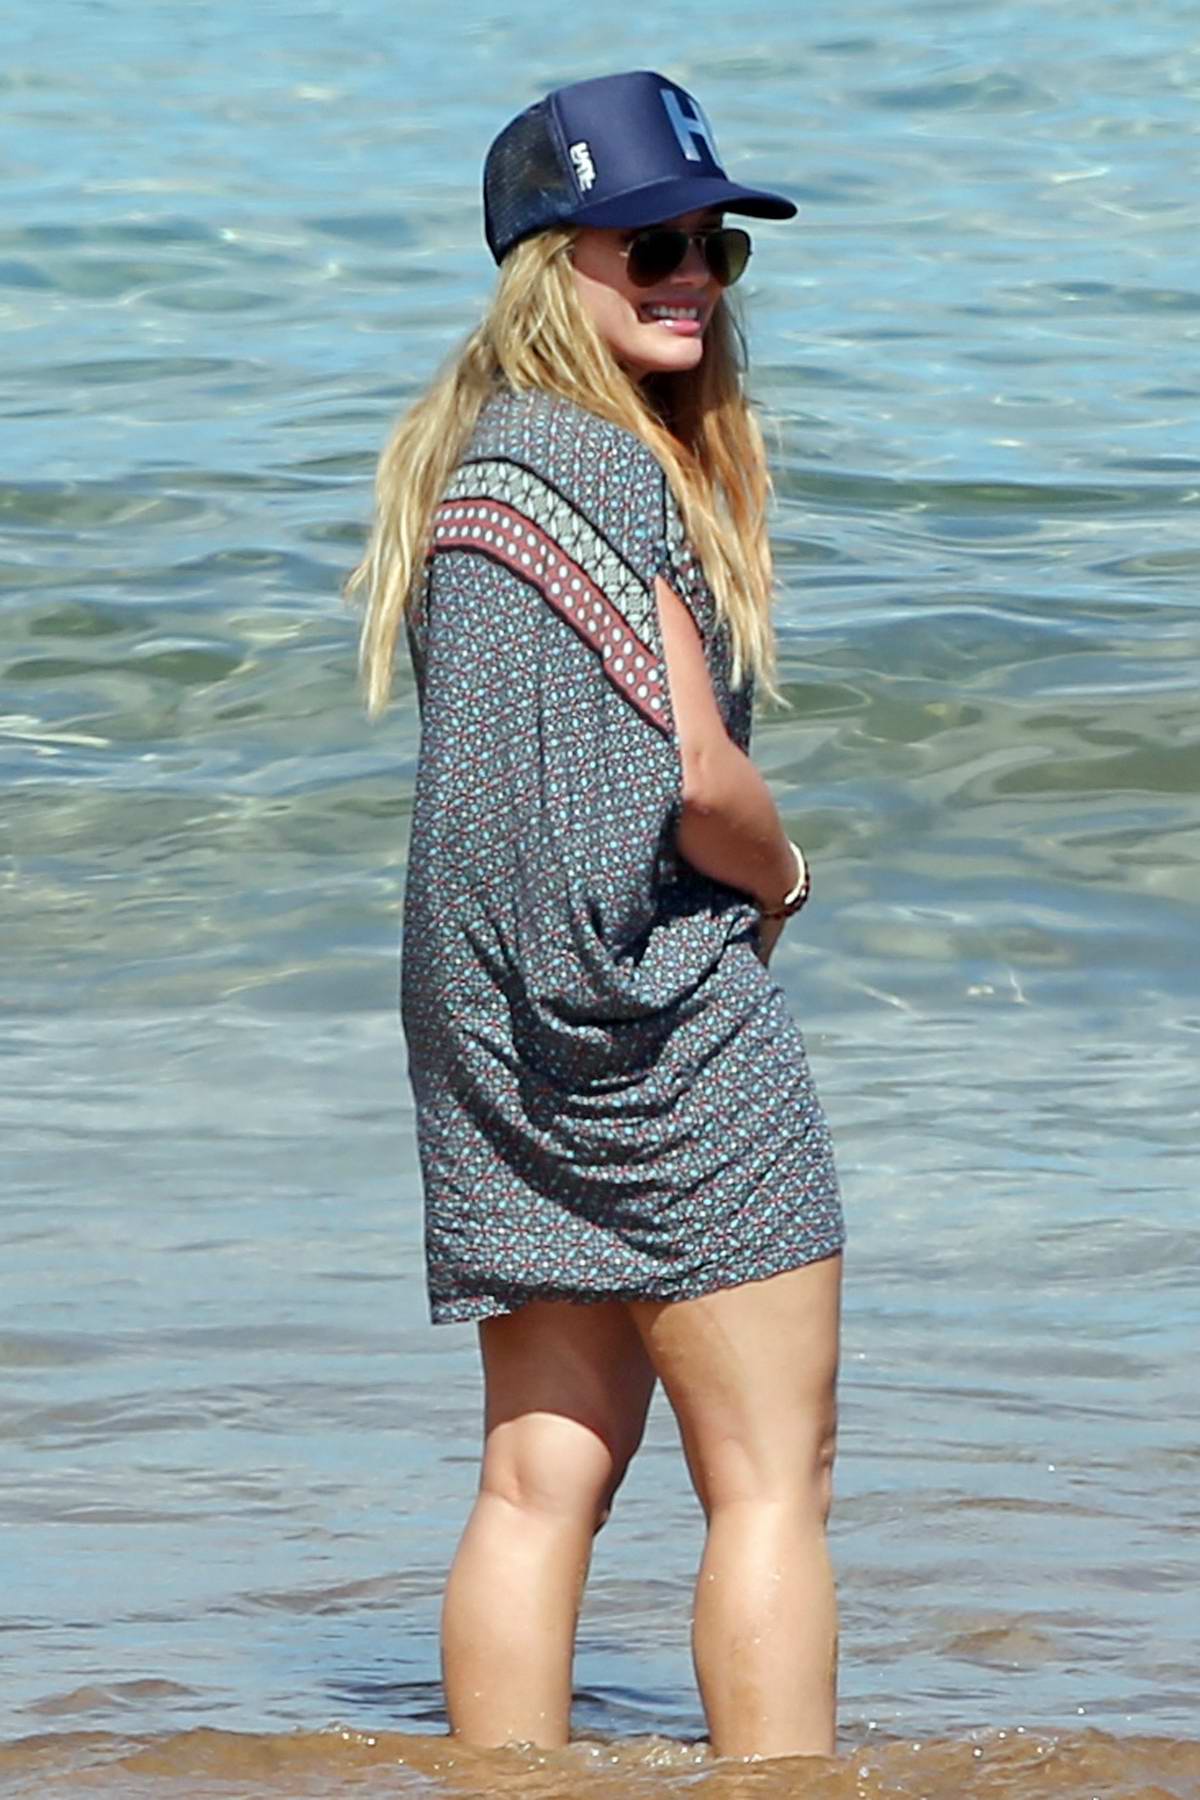 Hilary Duff In Bikini Having A Good Time On The Beach In Maui Hawaii 04081719 